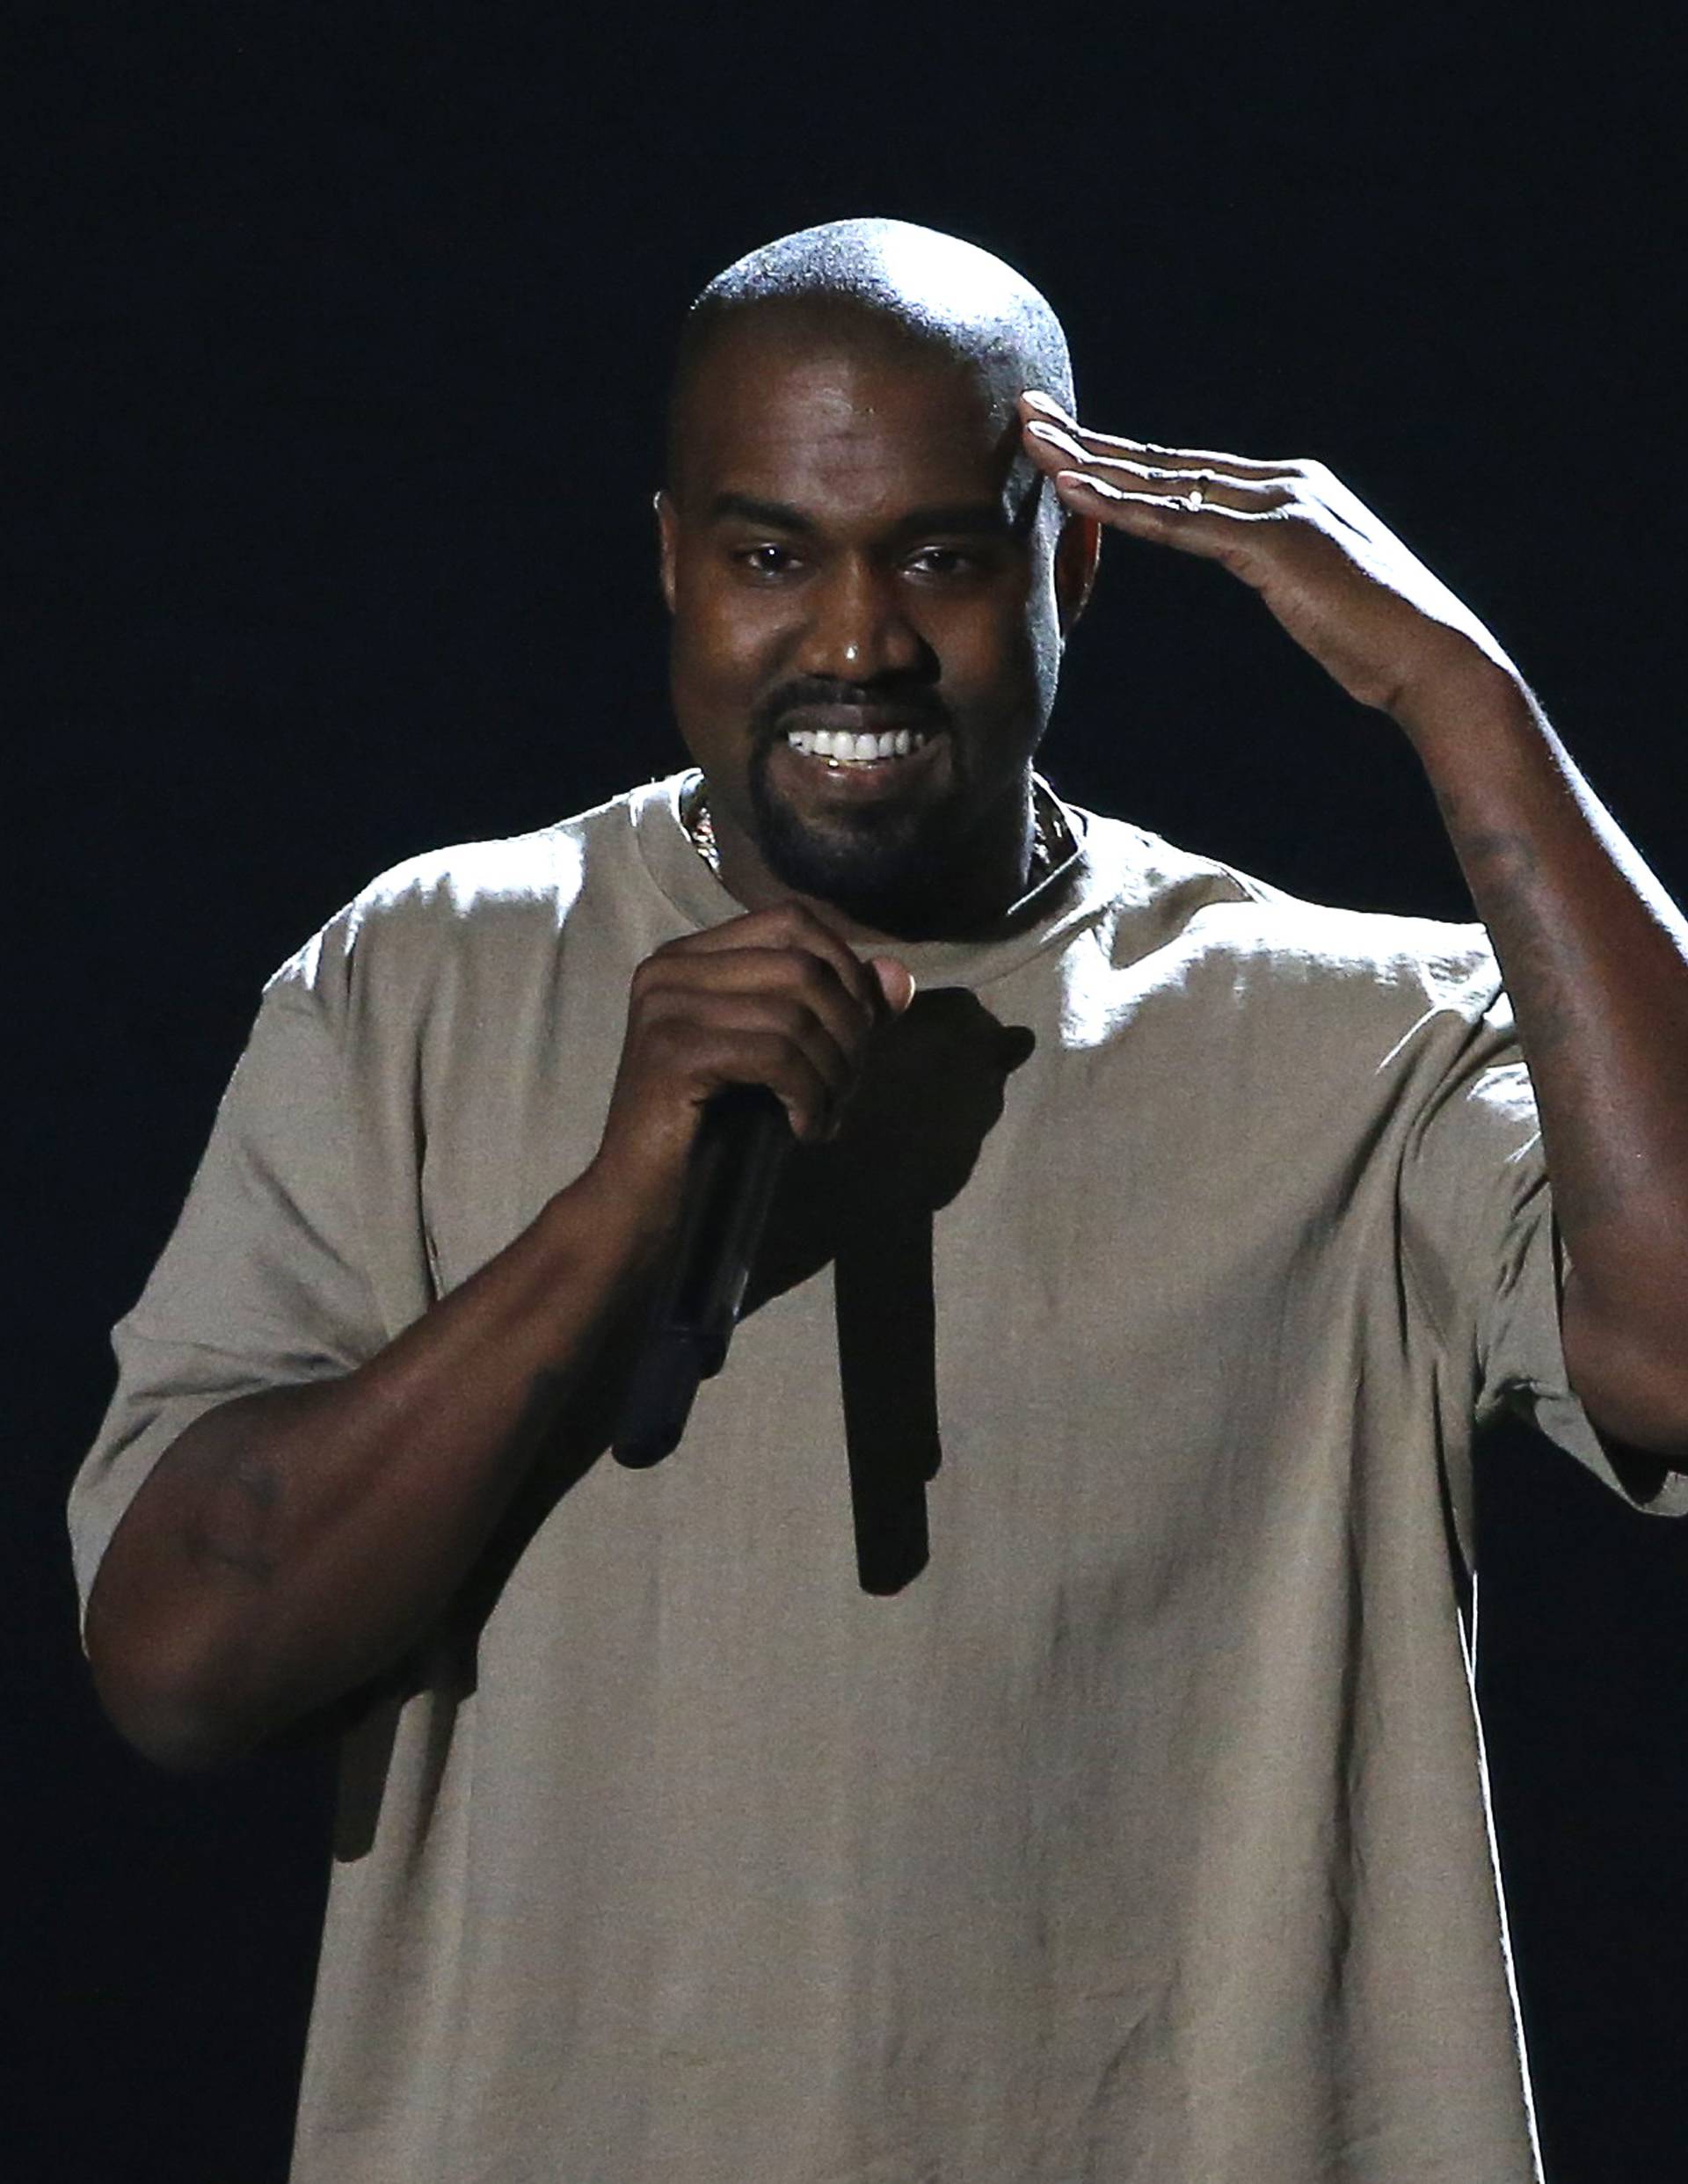 Reper Kanye West promijenio je ime: 'Od sada me zovite YE'